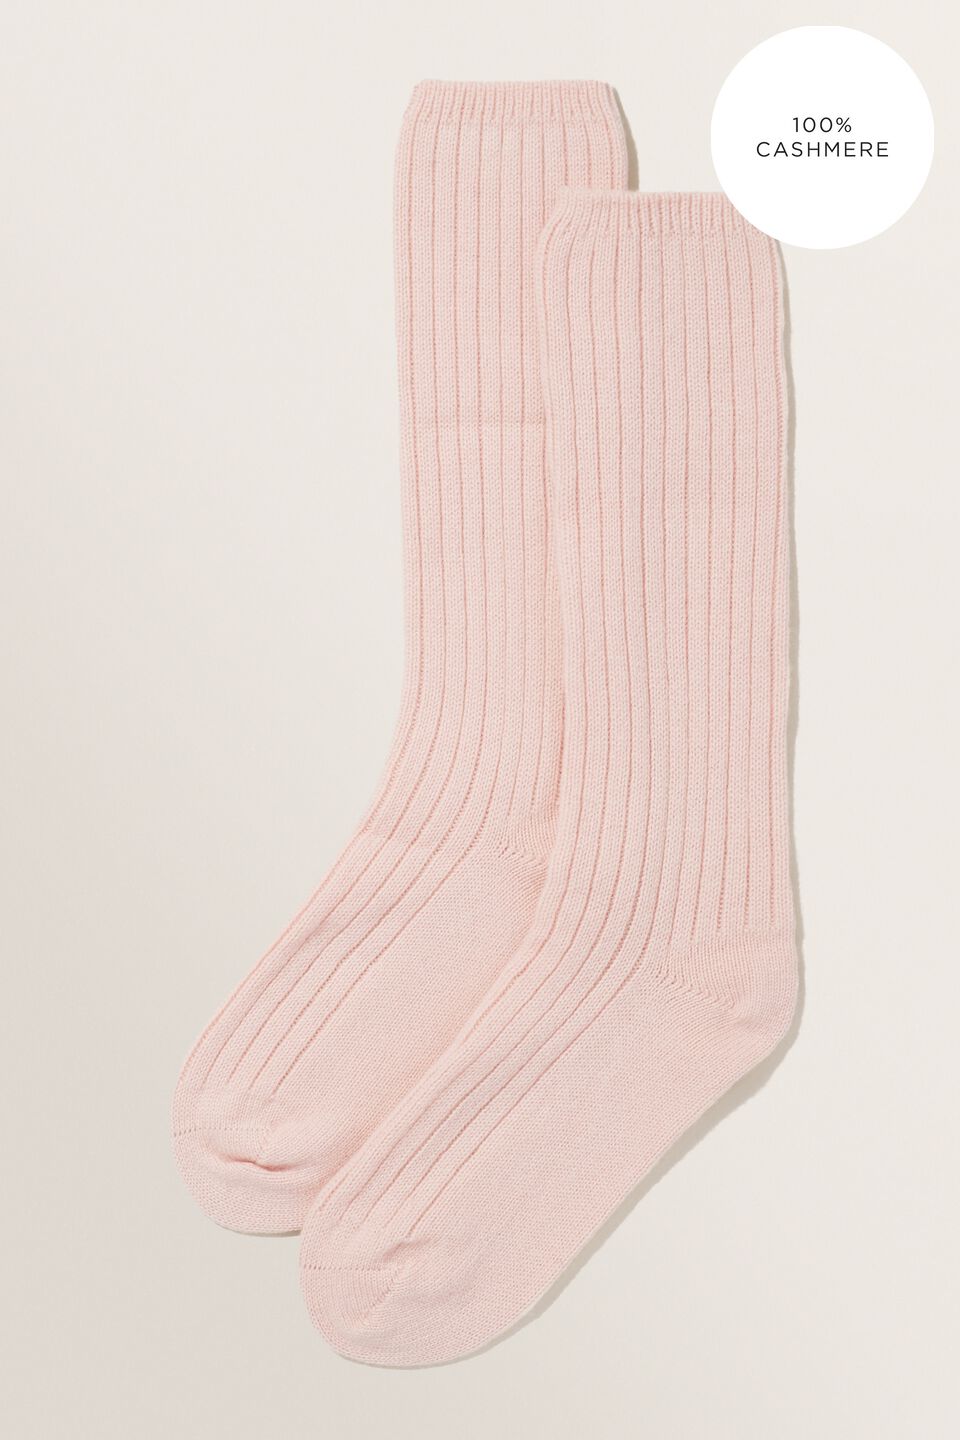 Cashmere Lounge Socks  Ash Pink